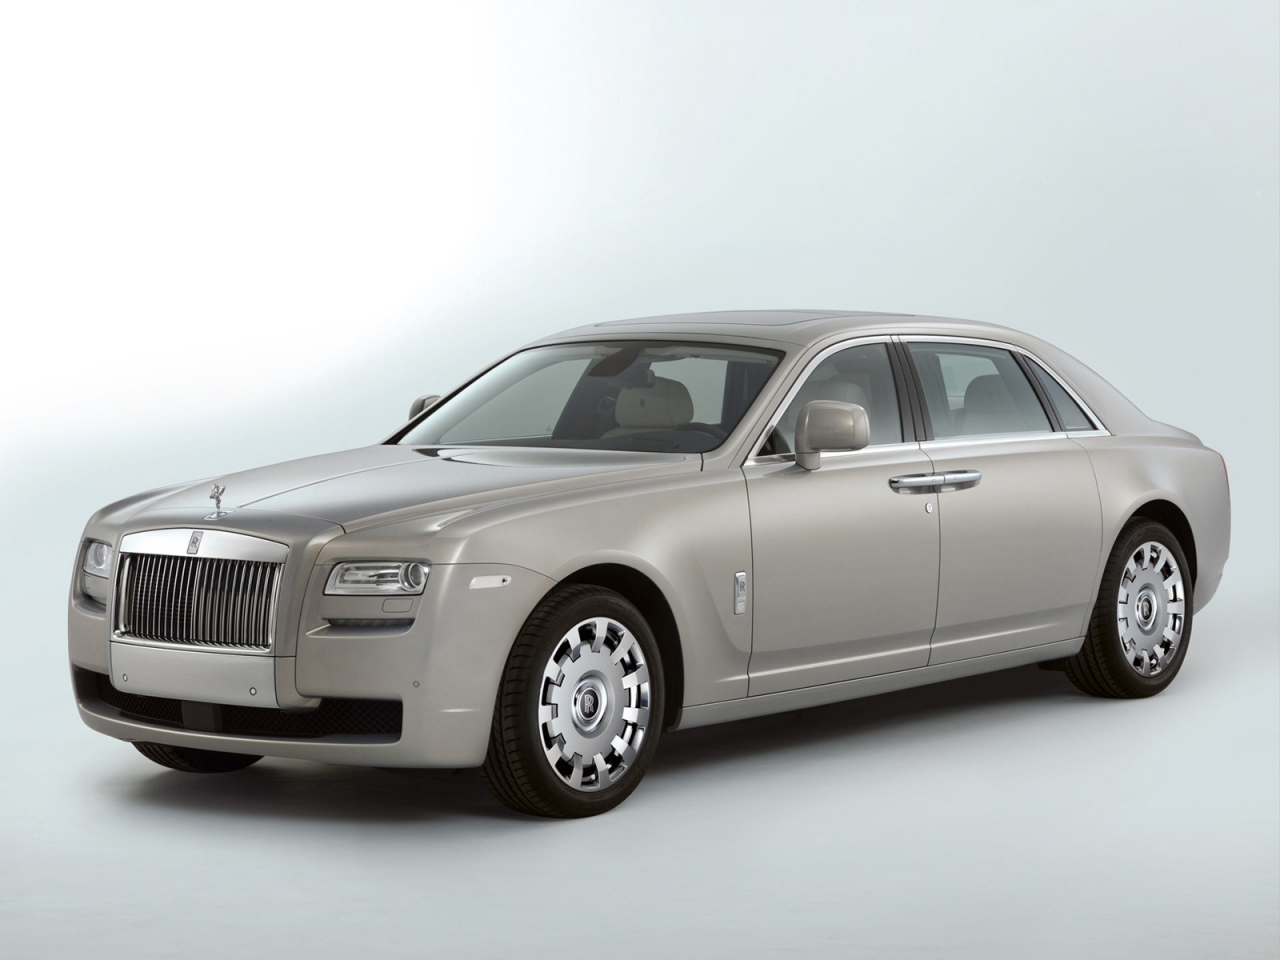 2011 Rolls Royce Ghost Studio for 1280 x 960 resolution